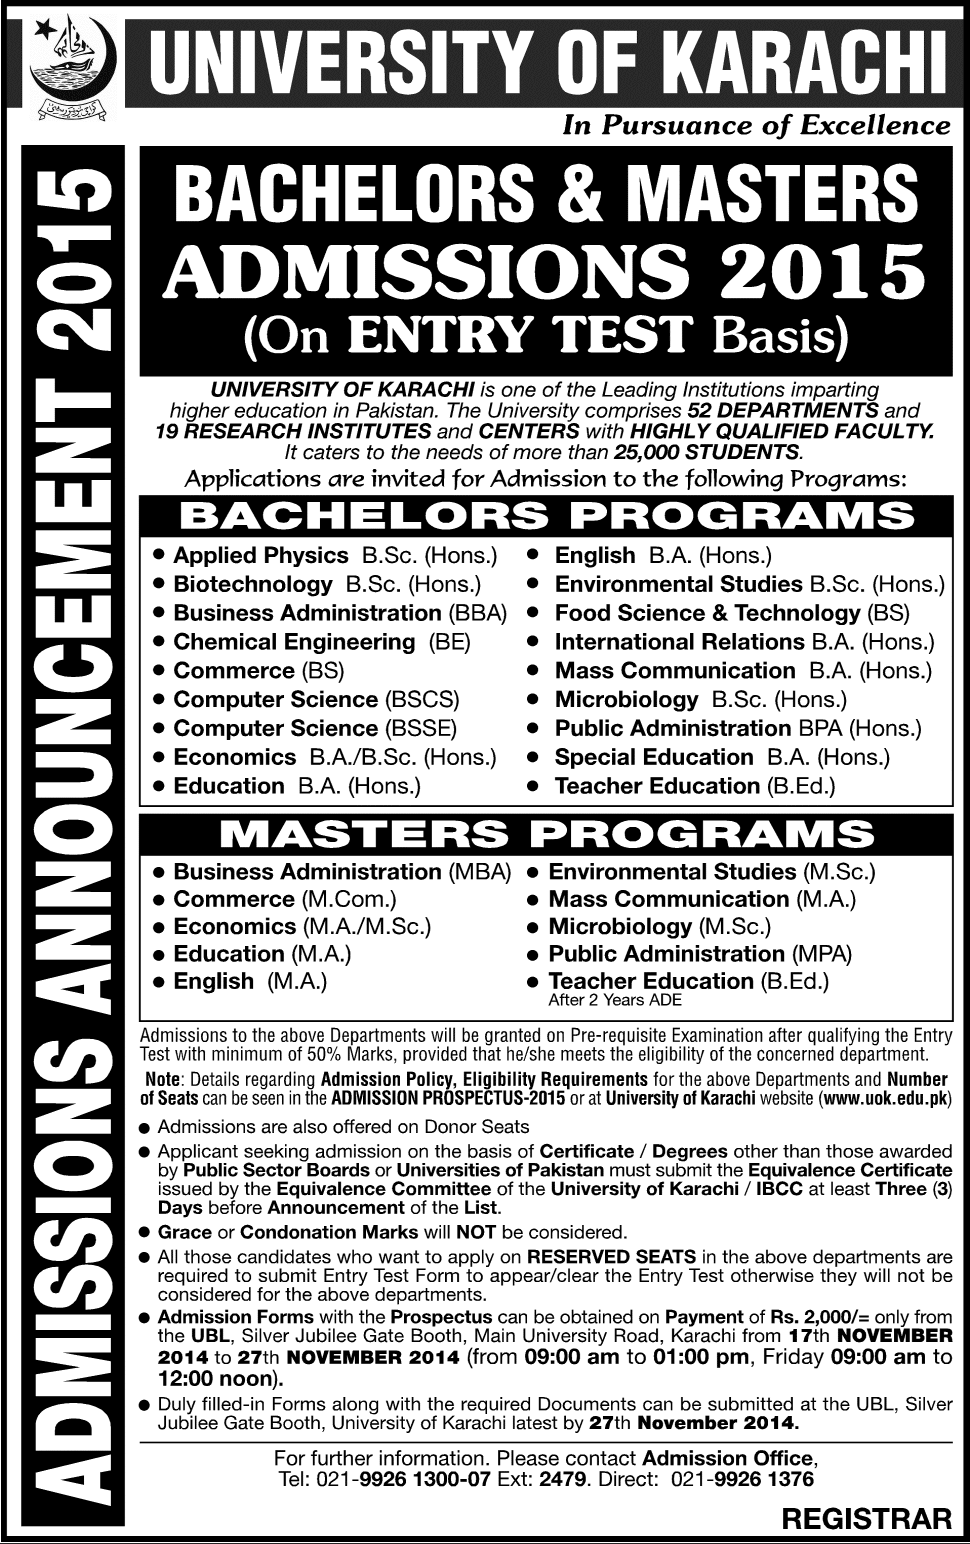 Karachi University Uok Bachelor, Masters Admission 2015 Form, Last Date